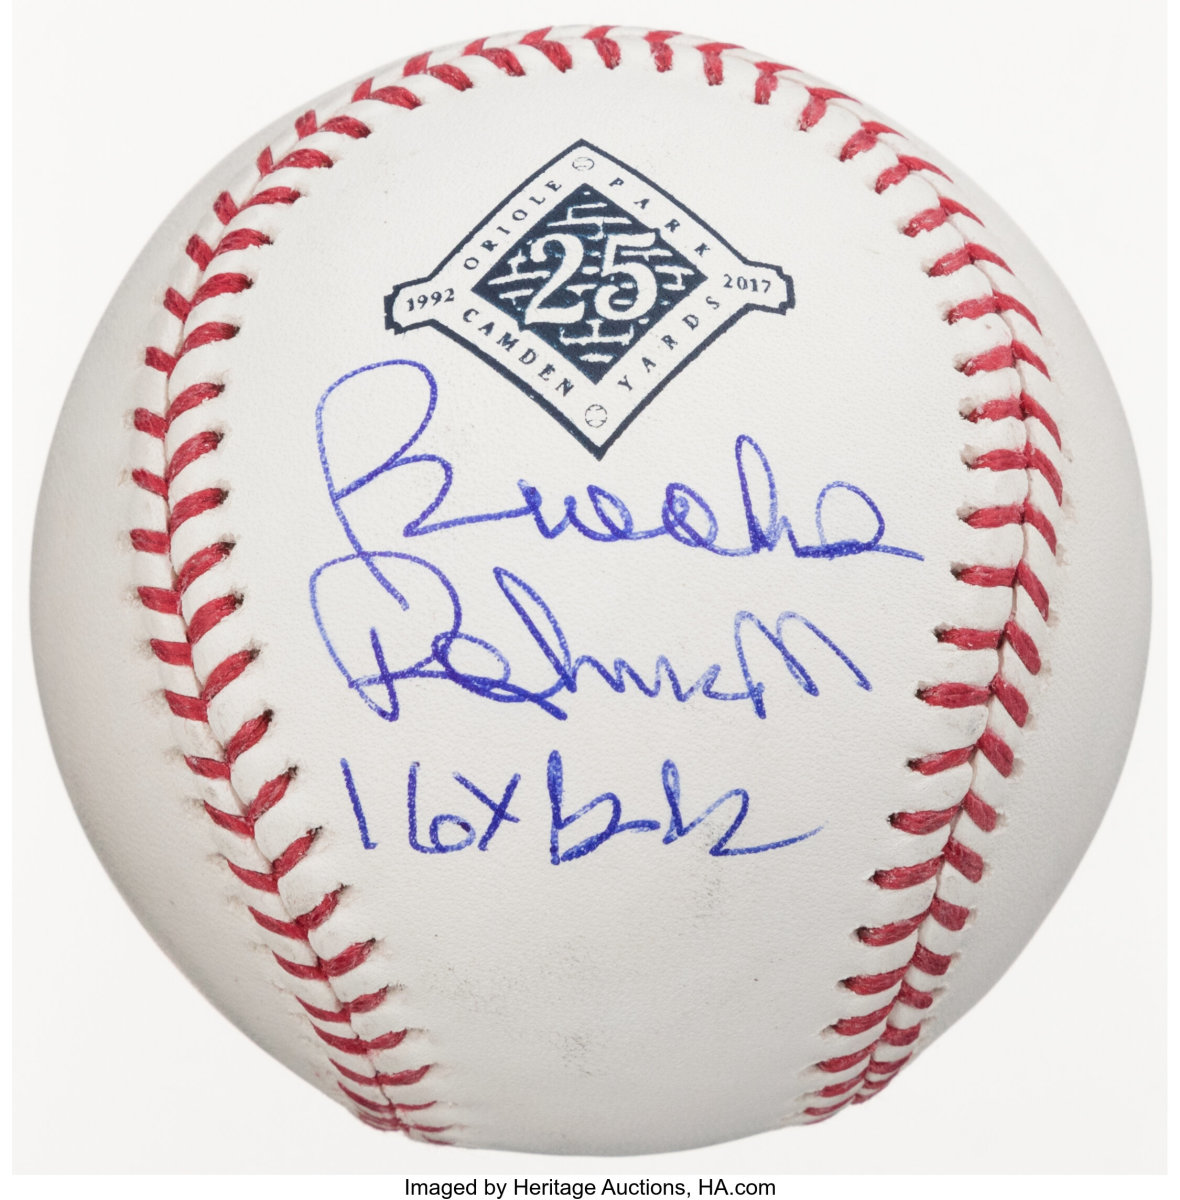 Brooks Robinson autographed ball.